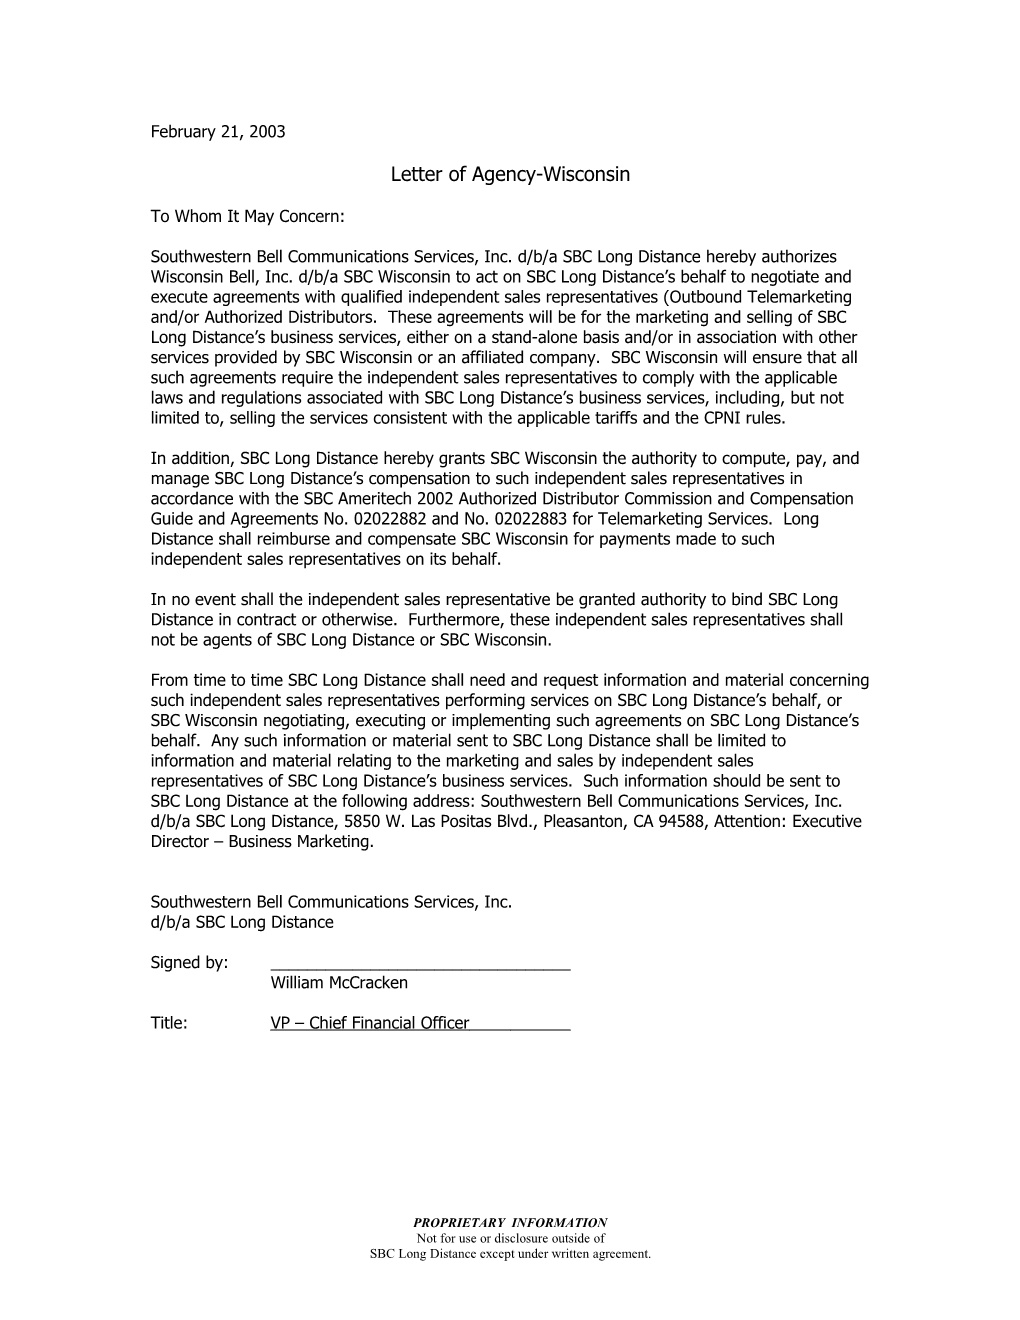 Letter of Agency-Wisconsin